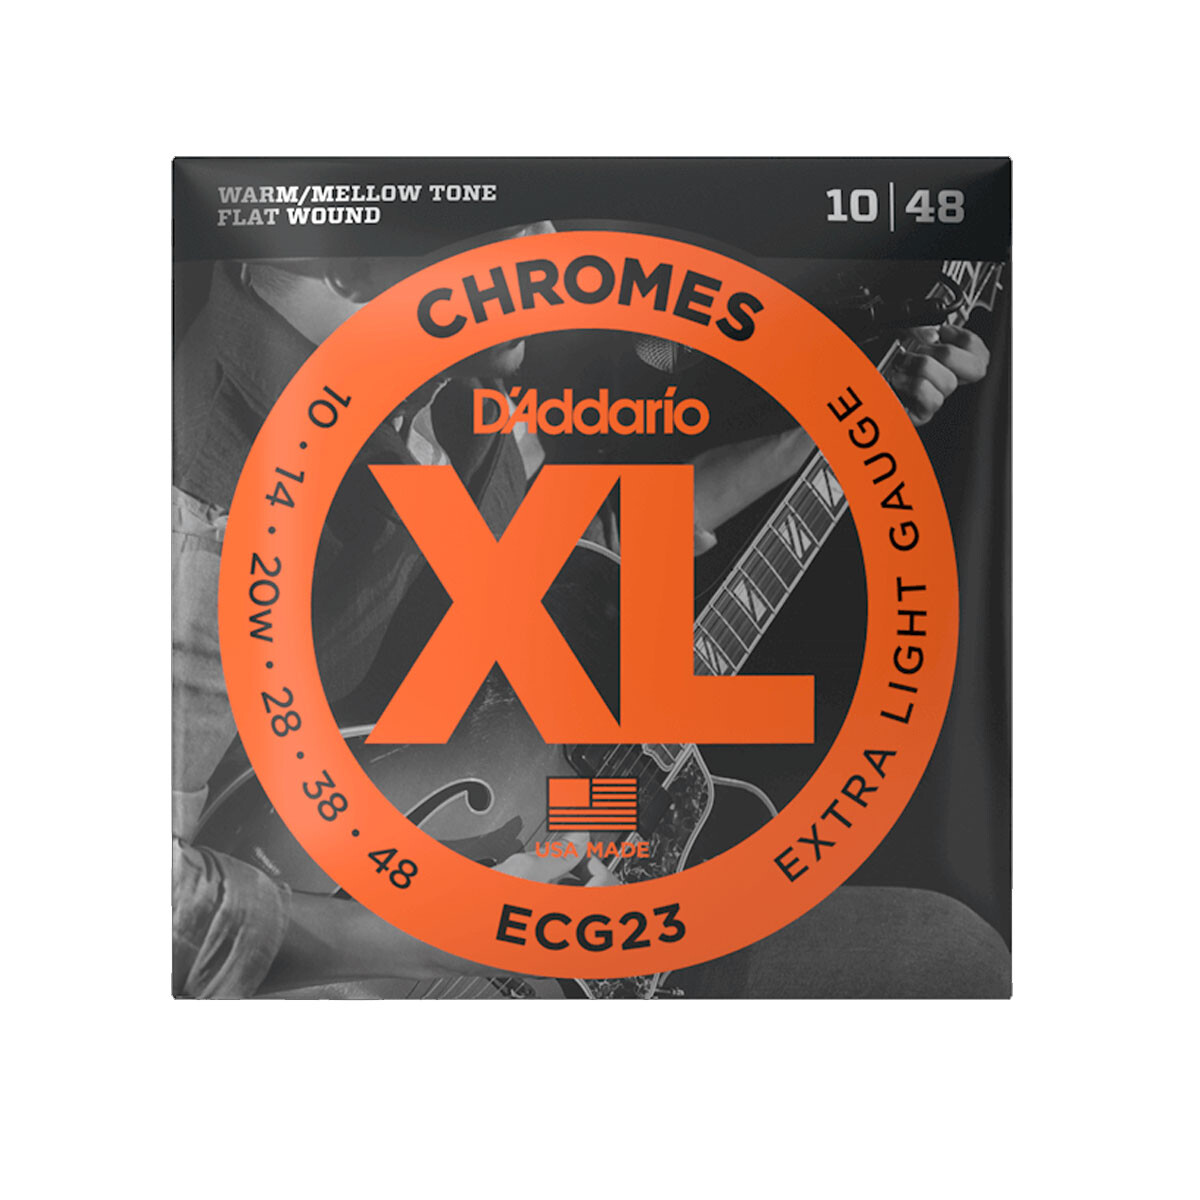 Encordado Electrica Daddario Ecg25 Chrome 10 